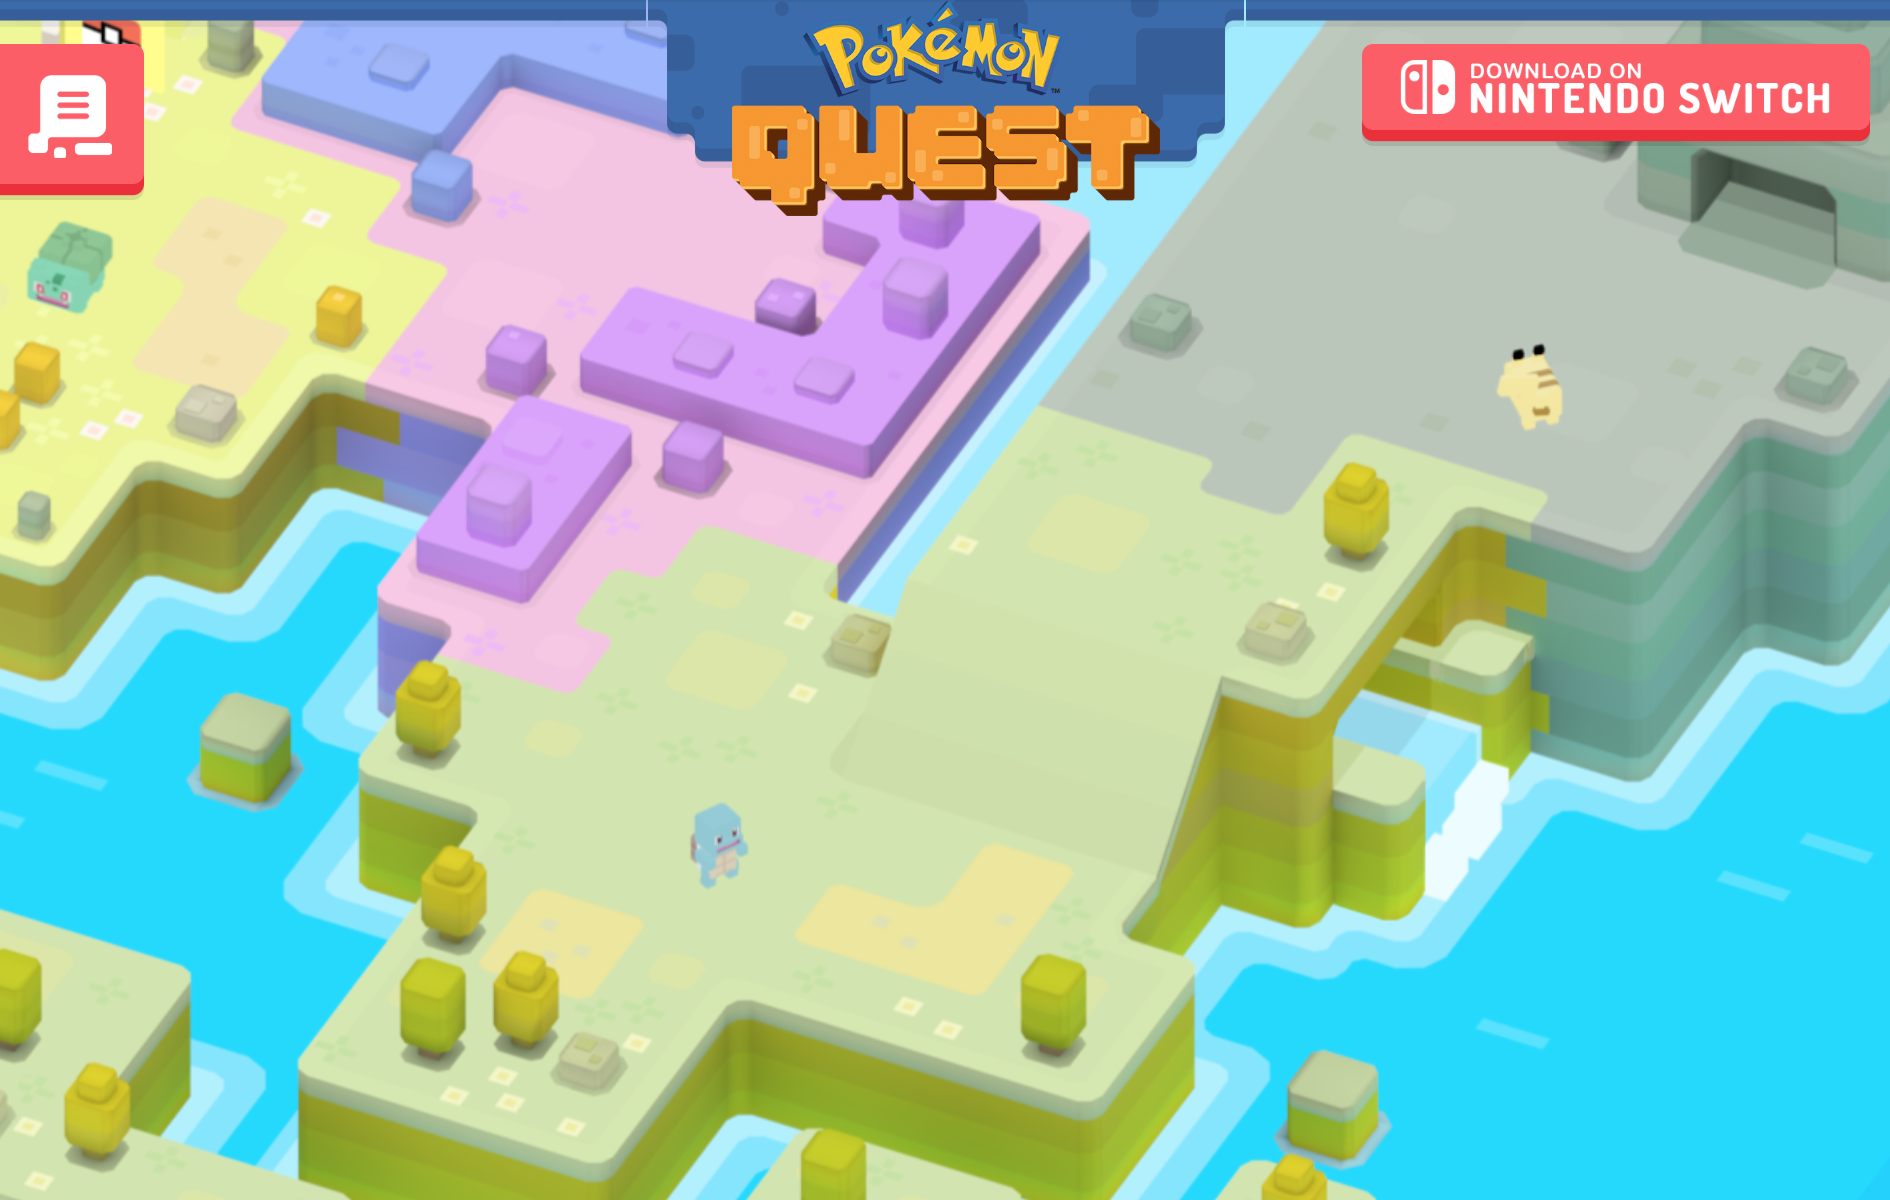 Nintendo switch quests. Pokemon Quest Nintendo Switch. Покемон Quest. Pokemon Quest Pokedex.